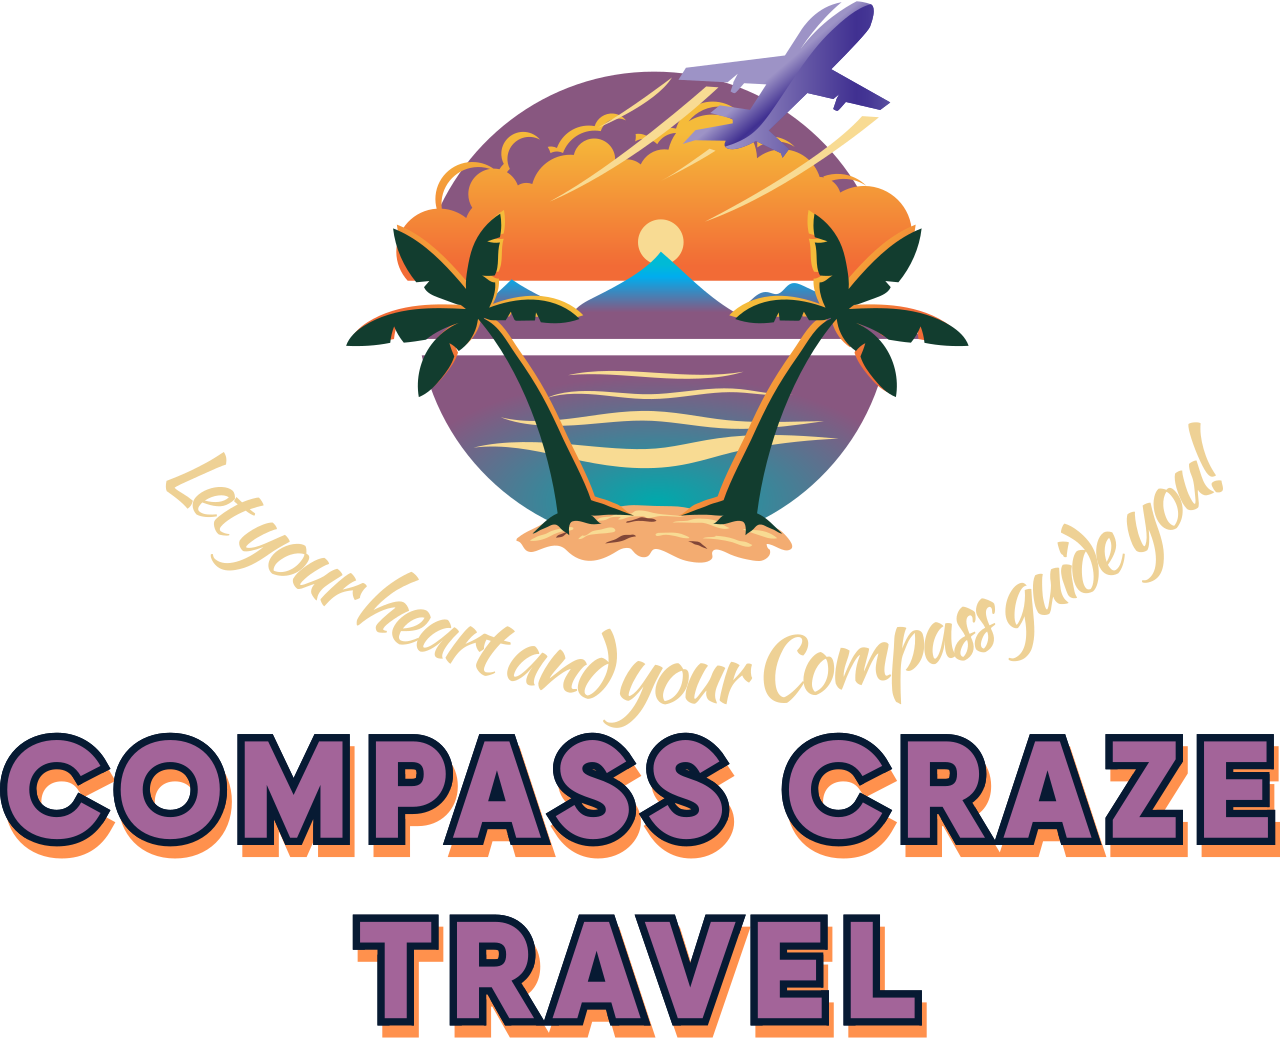 Compass Craze Travel, LLC's logo